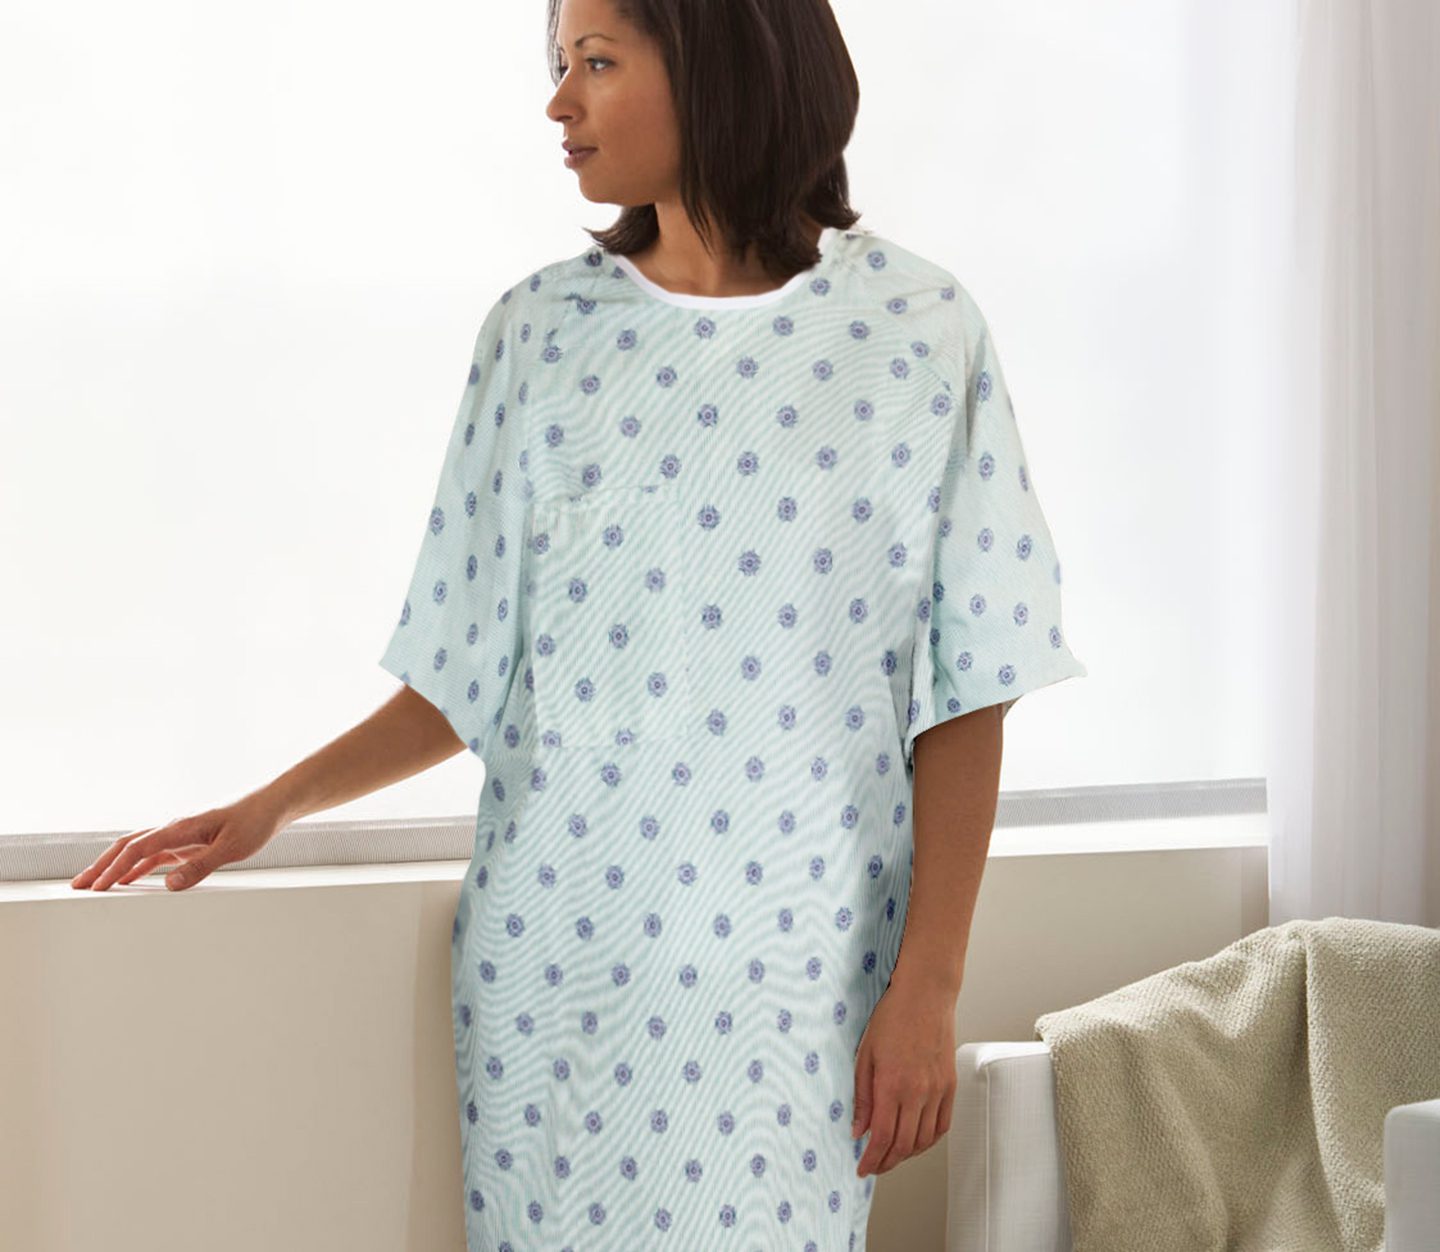 Amazon.com: 4PK - Men's Deluxe Value Patient Hospital Gown Robe, Soft &  Comfortable Gowns Size Medium/Large (Blue) : Industrial & Scientific